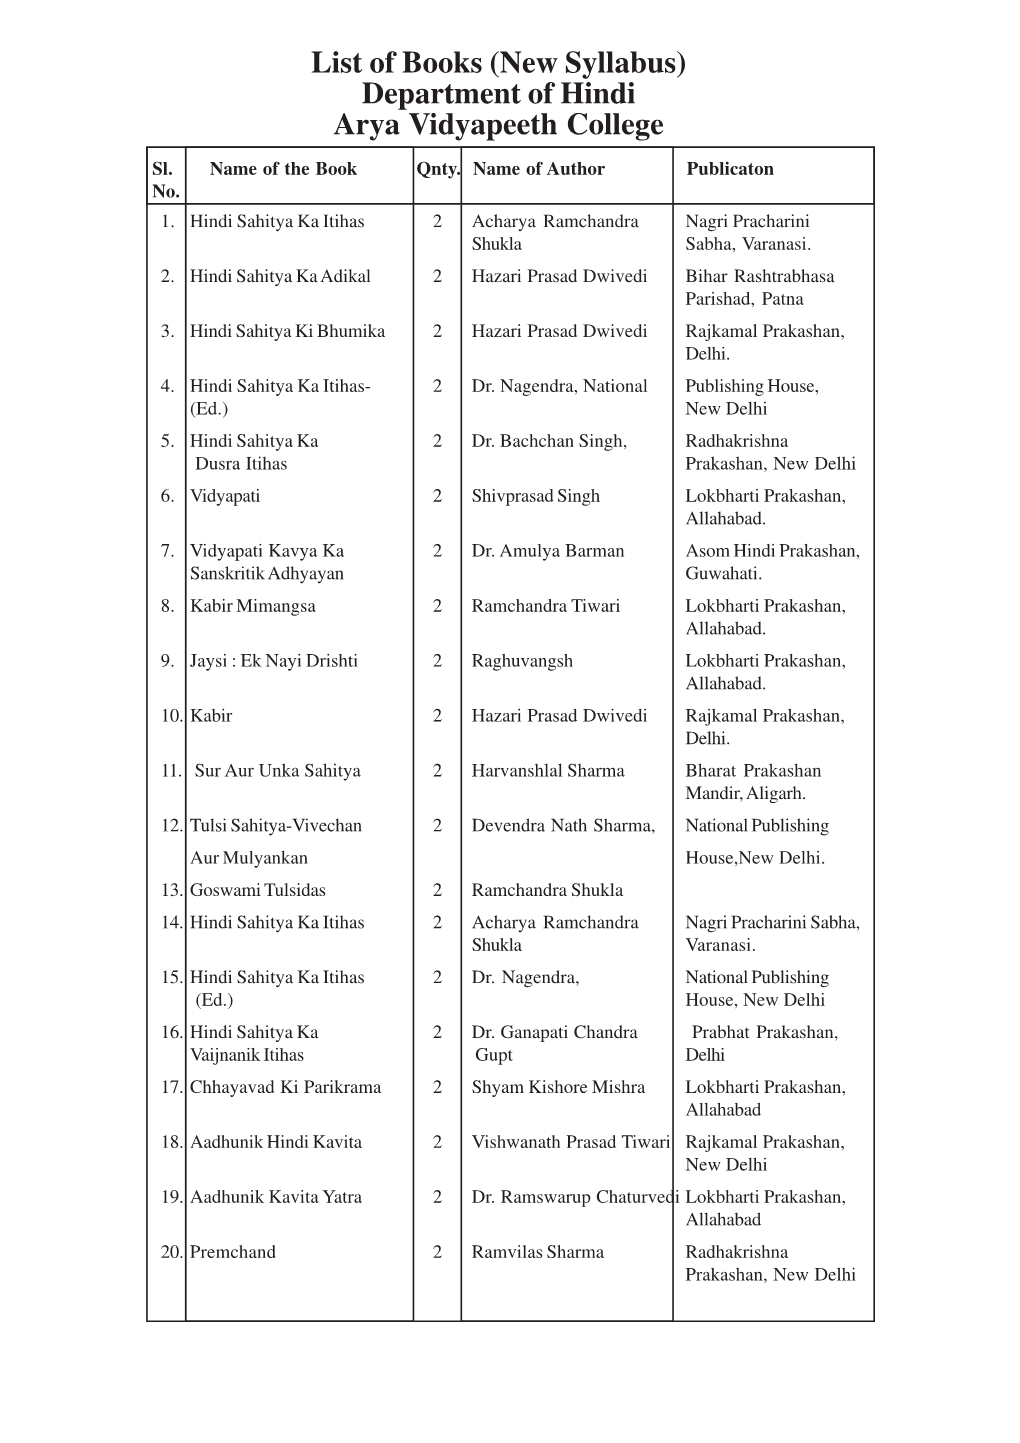 List of Books (New Syllabus) Department of Hindi Arya Vidyapeeth College